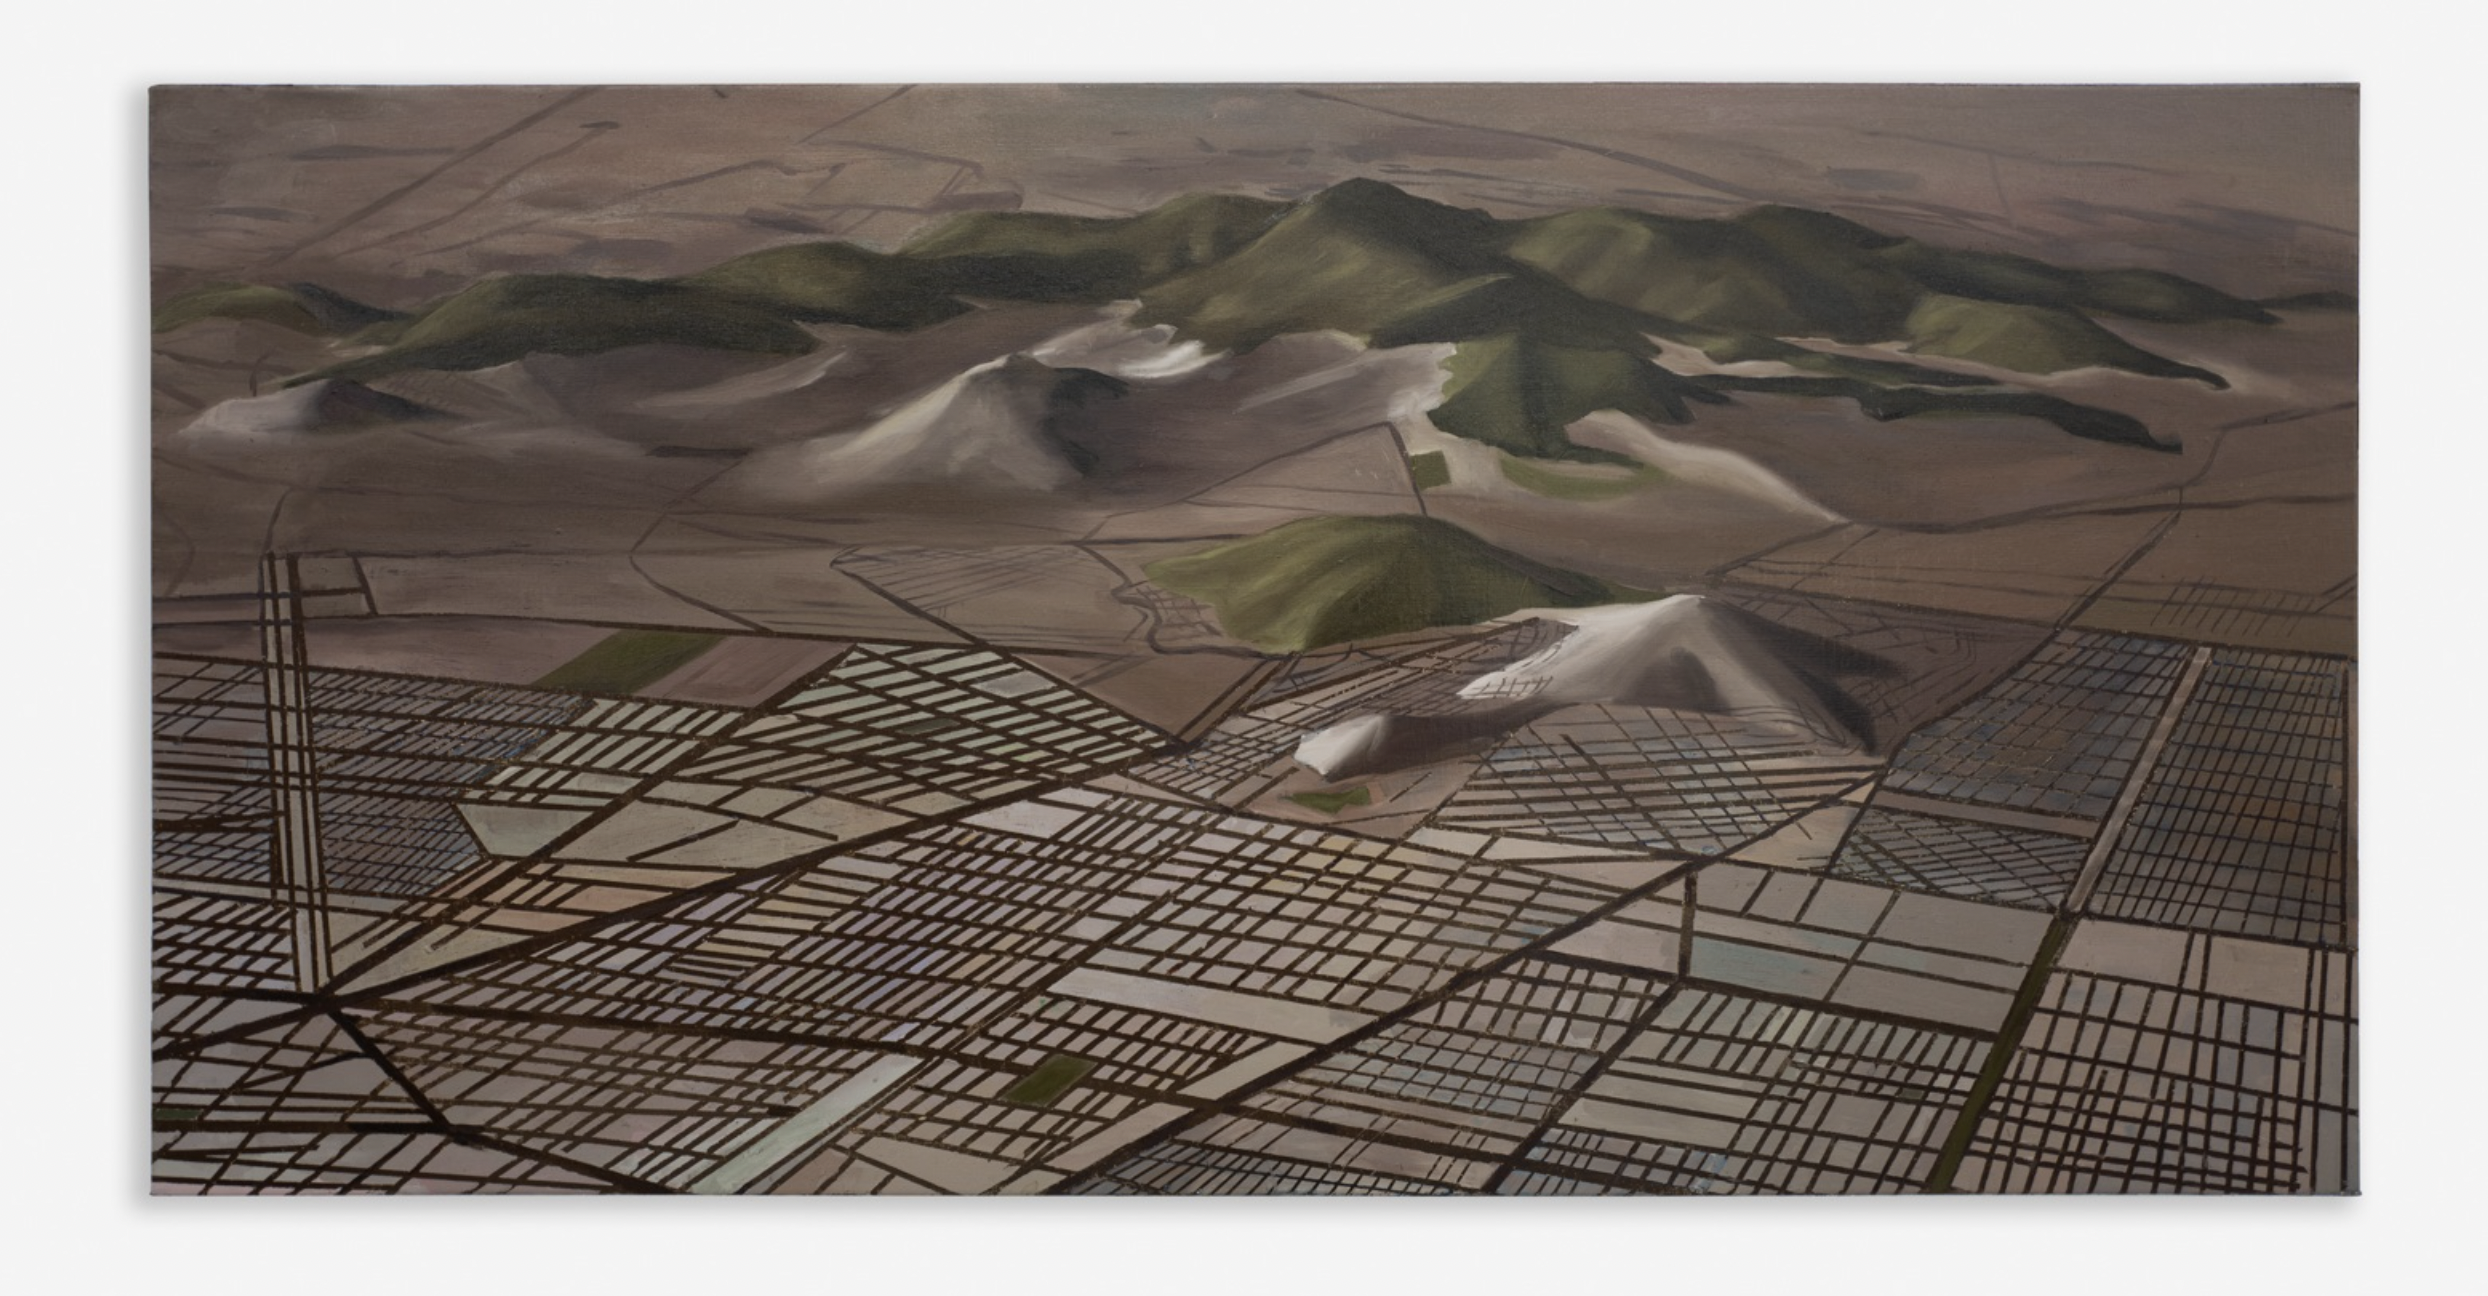   Landscape,  2021  Oil on linen  20 x 40 inches / 50.8 x 101.6 cm 